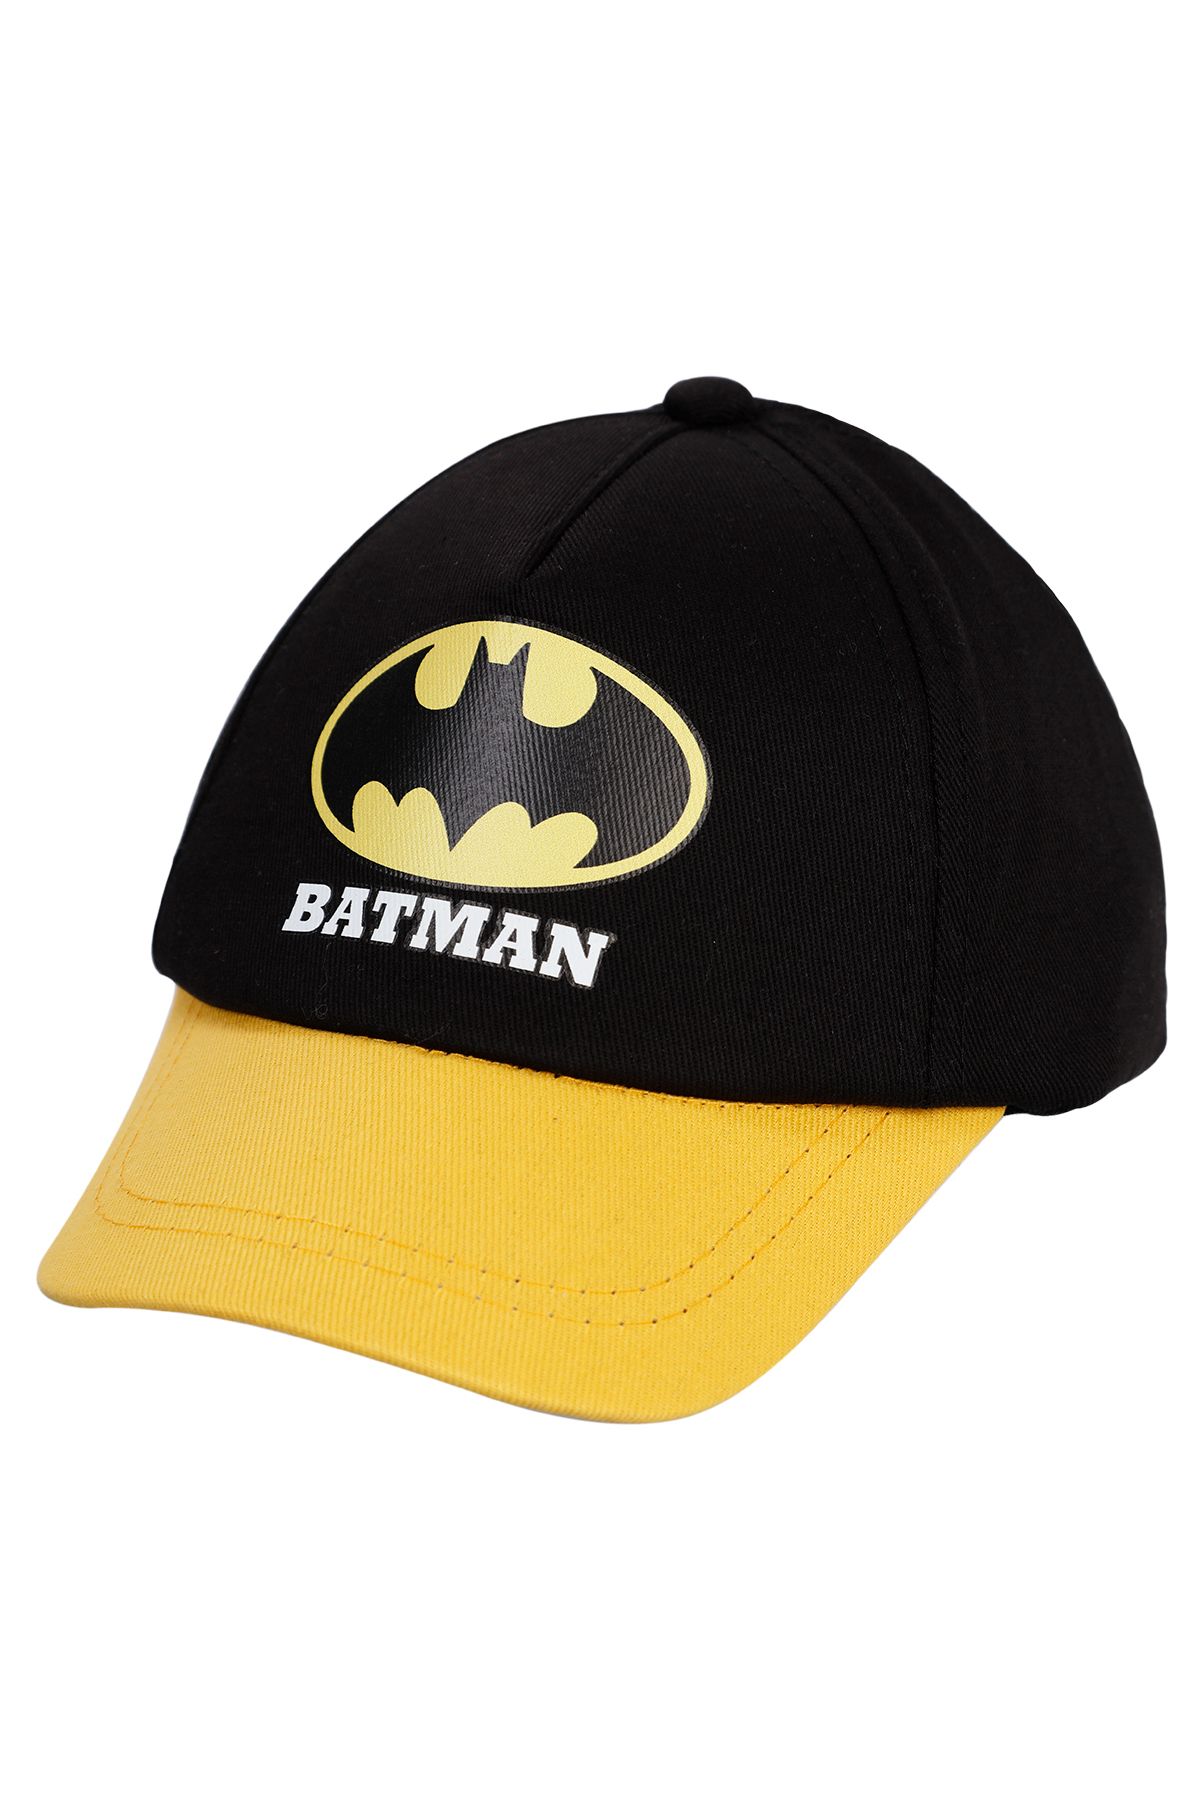 Batman Erkek Çocuk Kep Şapka 2-5 Yaş Siyah-Sarı A6K81233124S1